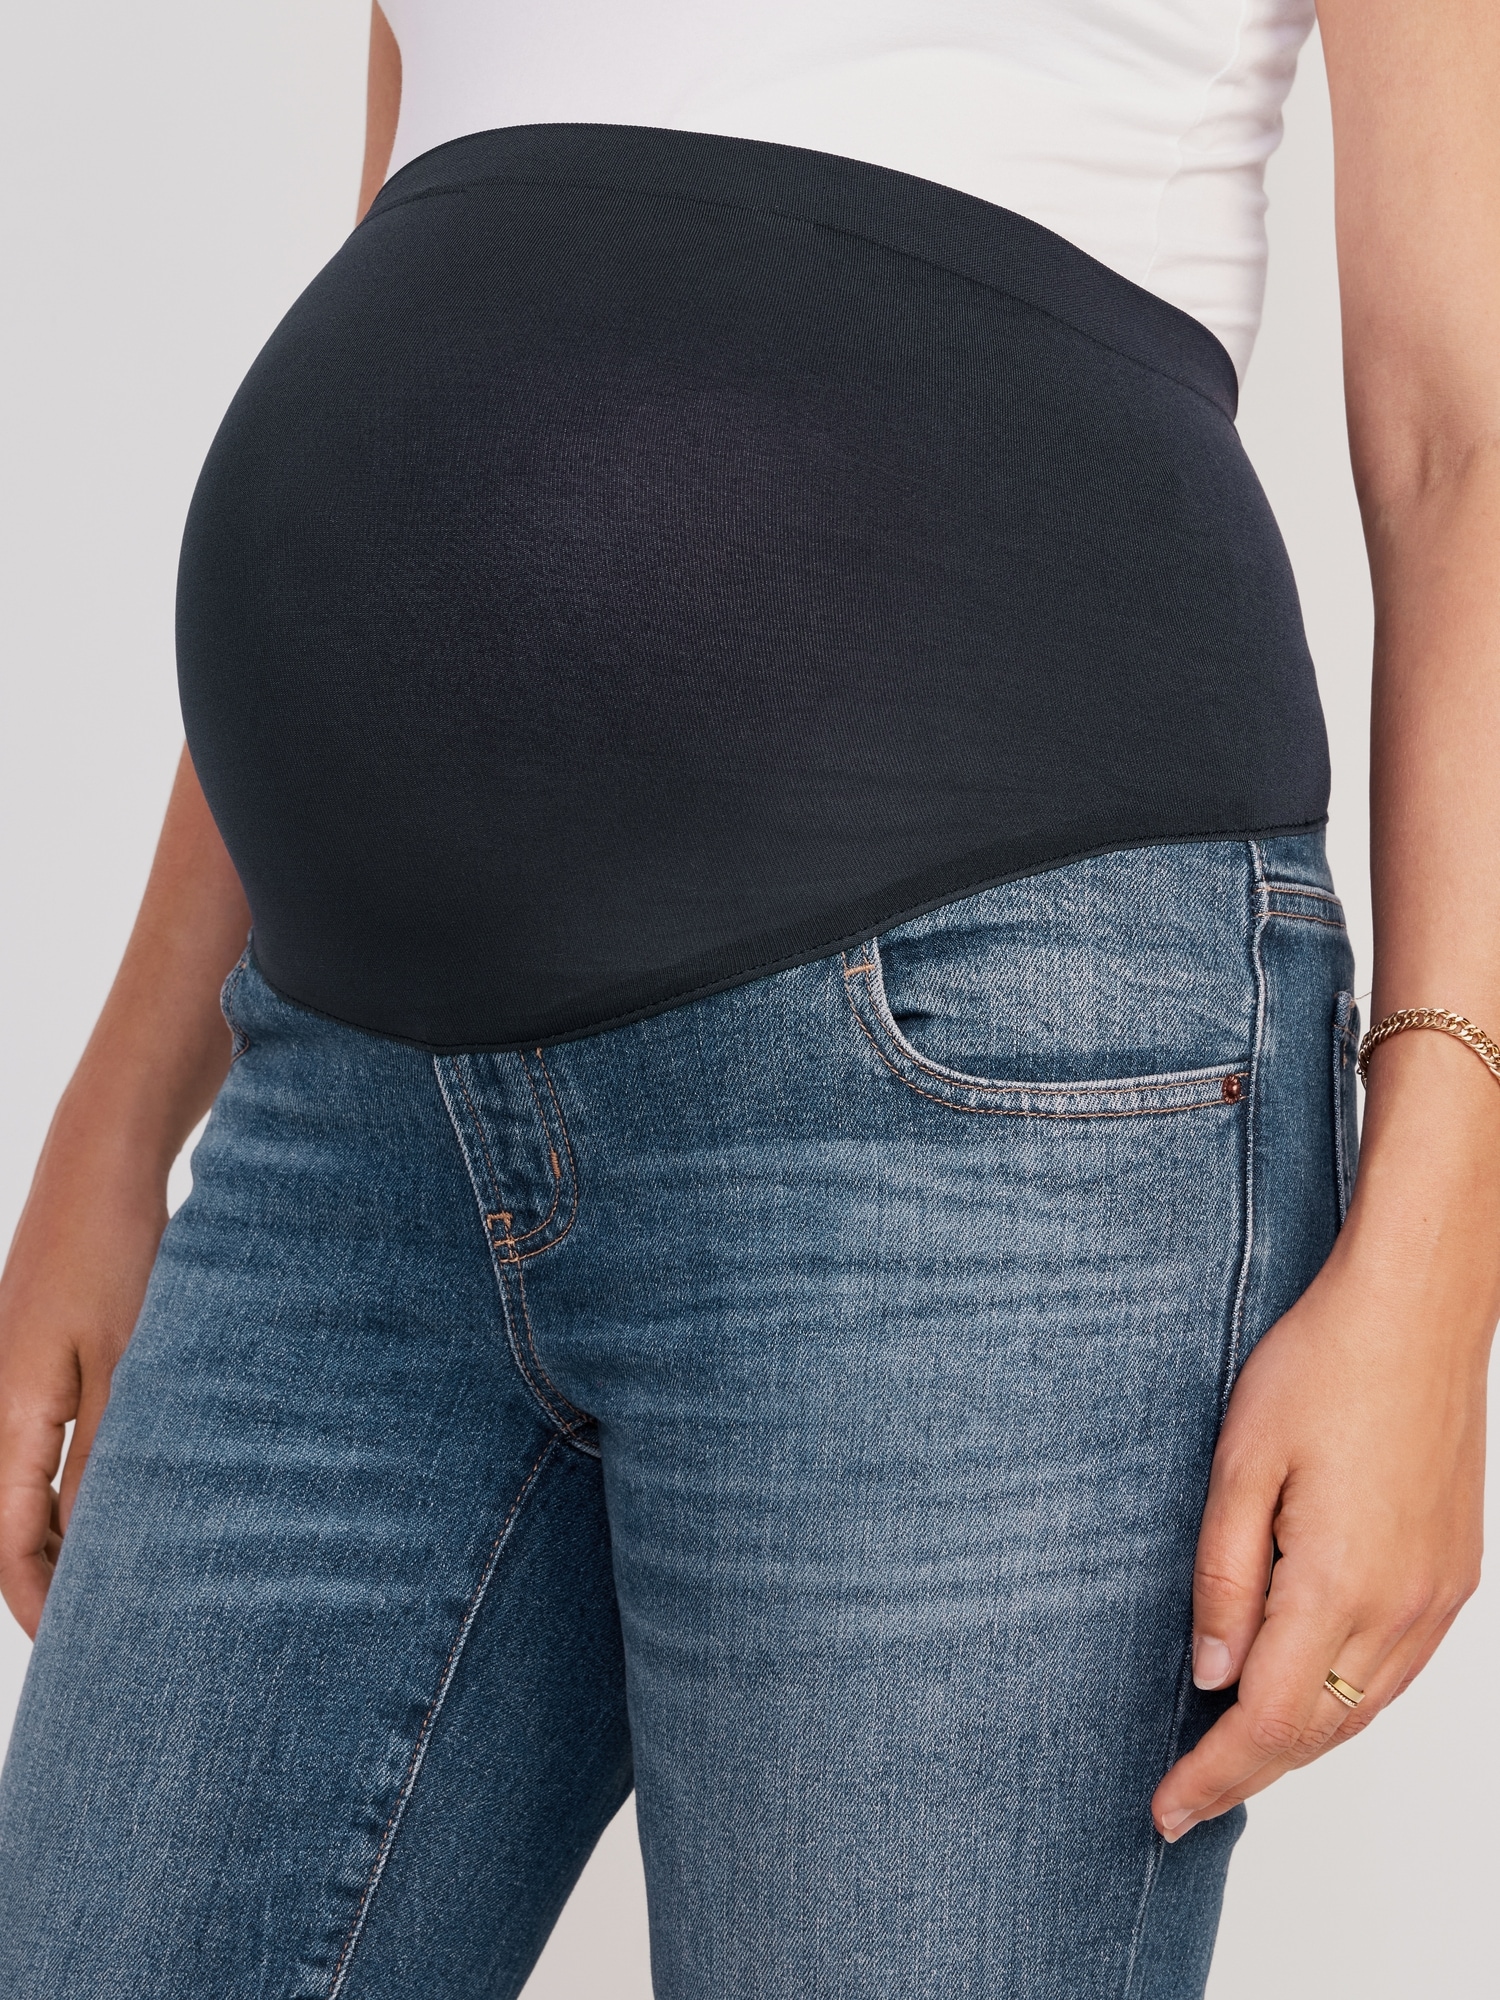 Buy Maternity Jeans - Shop Online